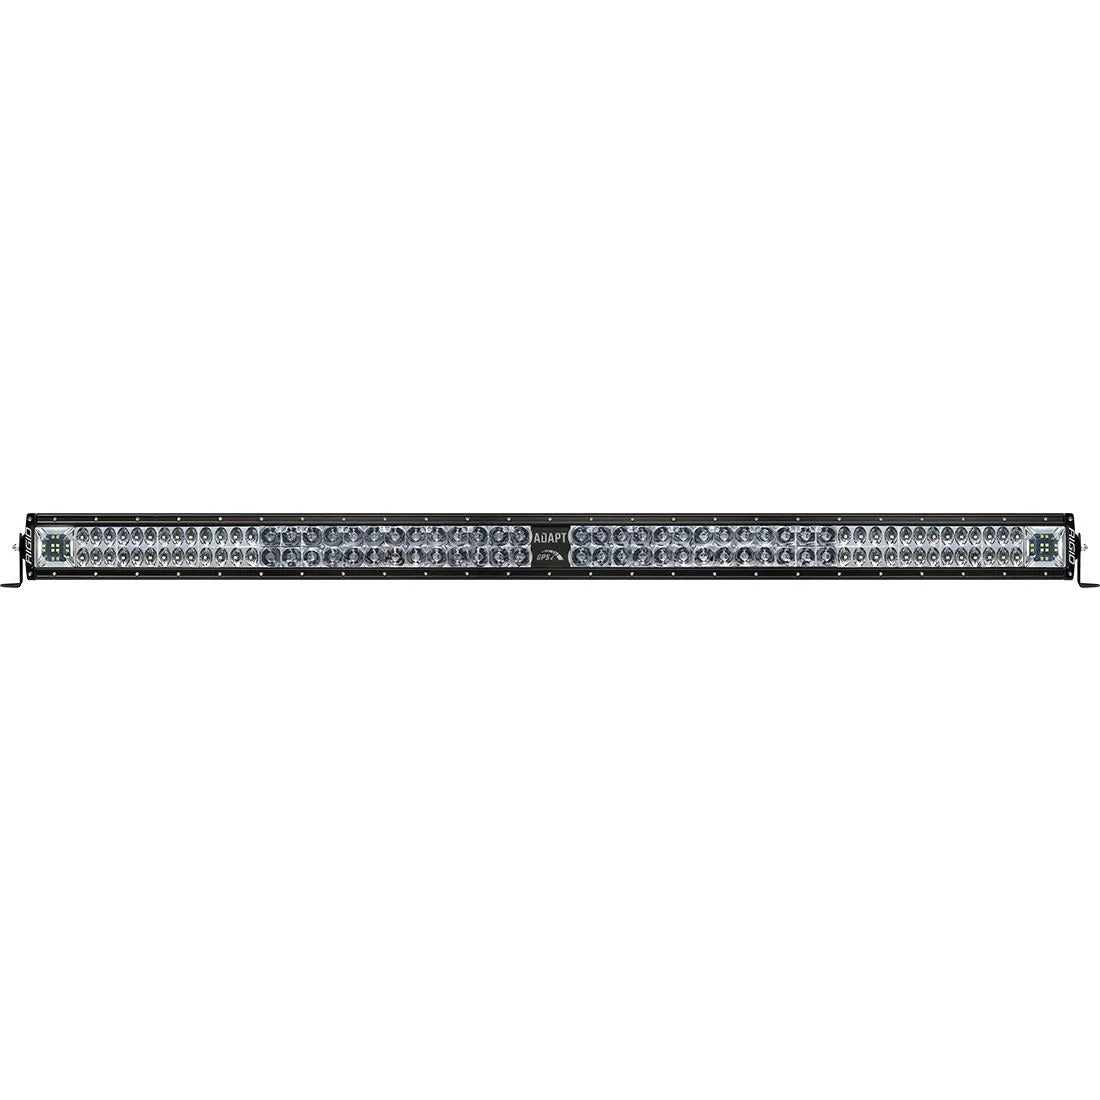 Rigid E-Series ADAPT Pro Light Bars (Sizes 20''-50'')